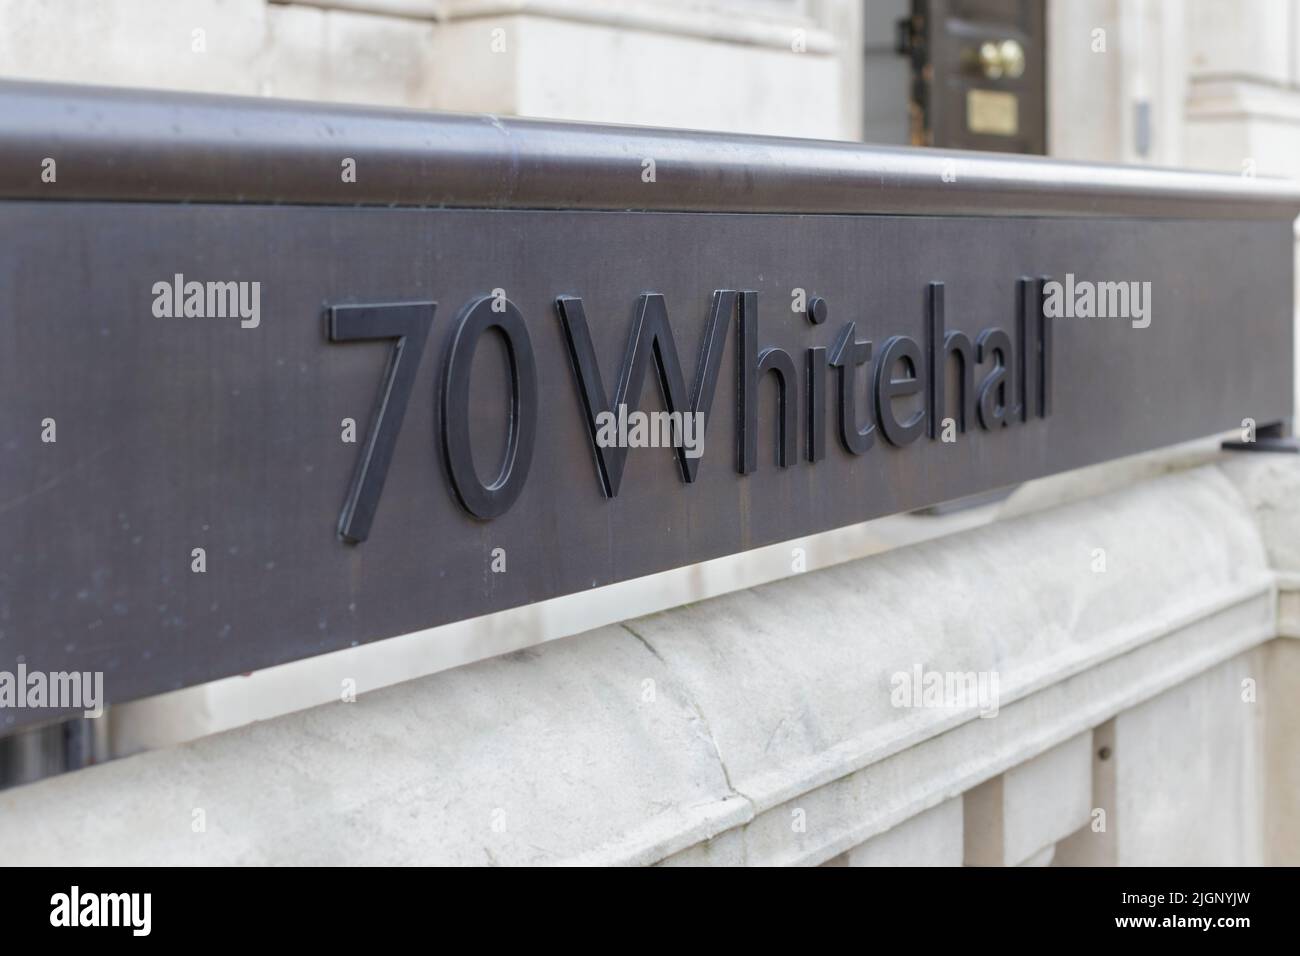 70 Whitehall sign, London, England, Stock Photo